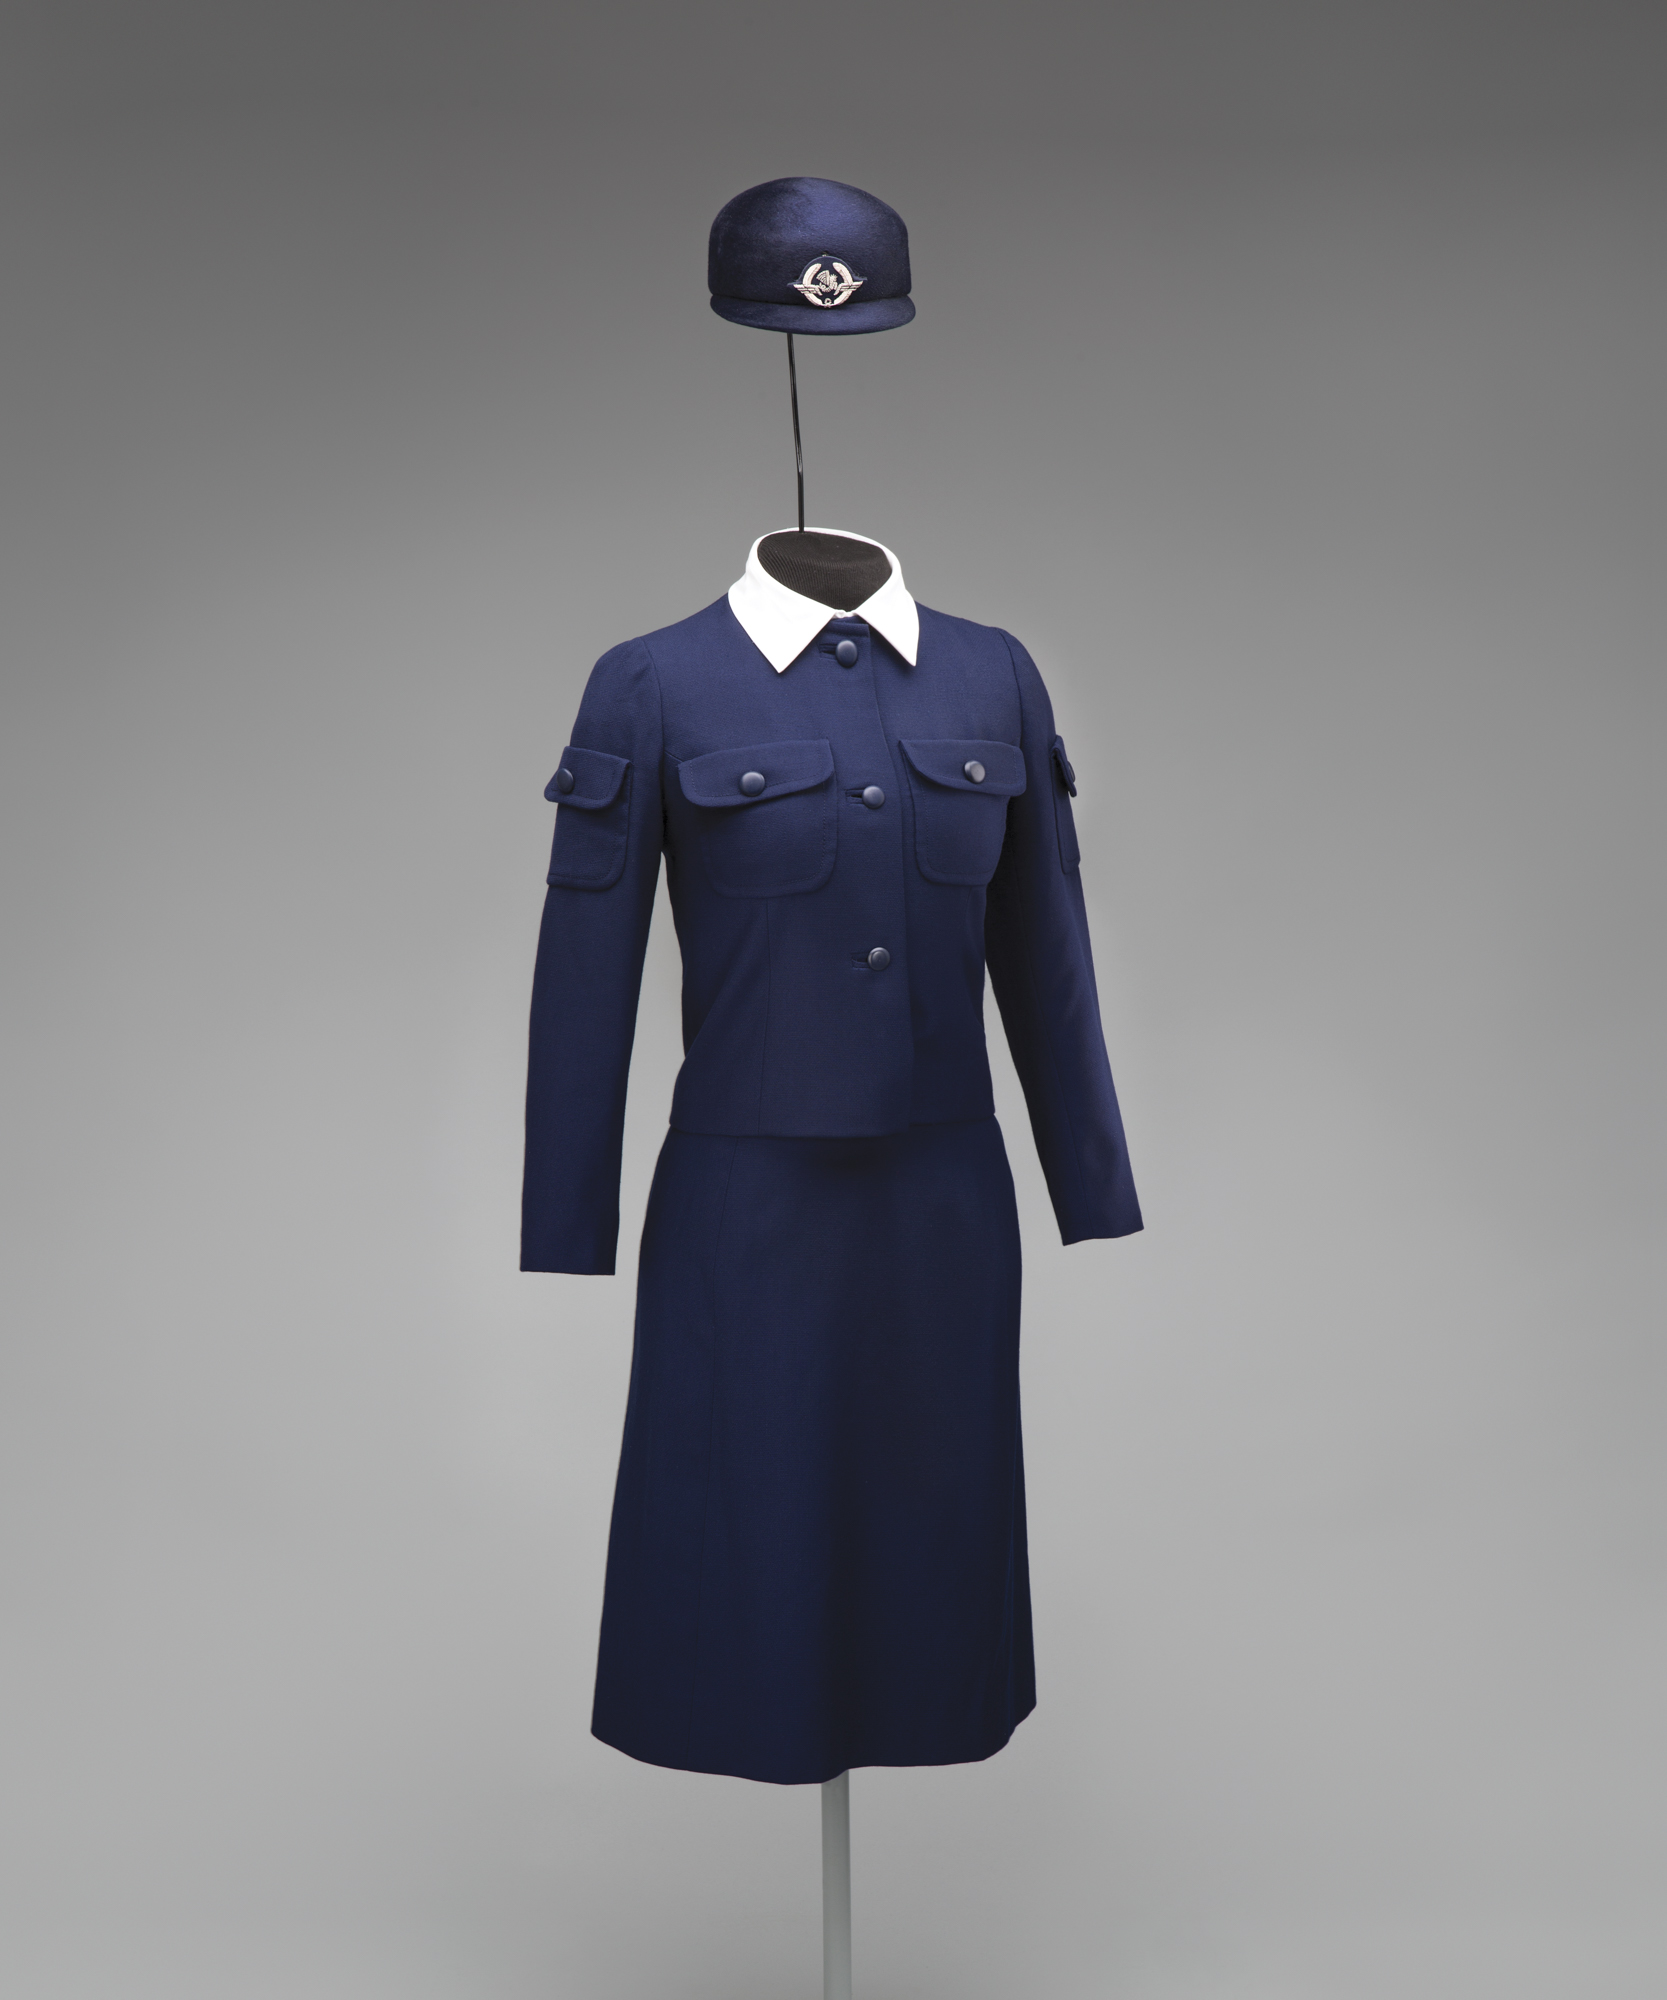 The 1969 Air France uniform by  Cristóbal Balenciaga